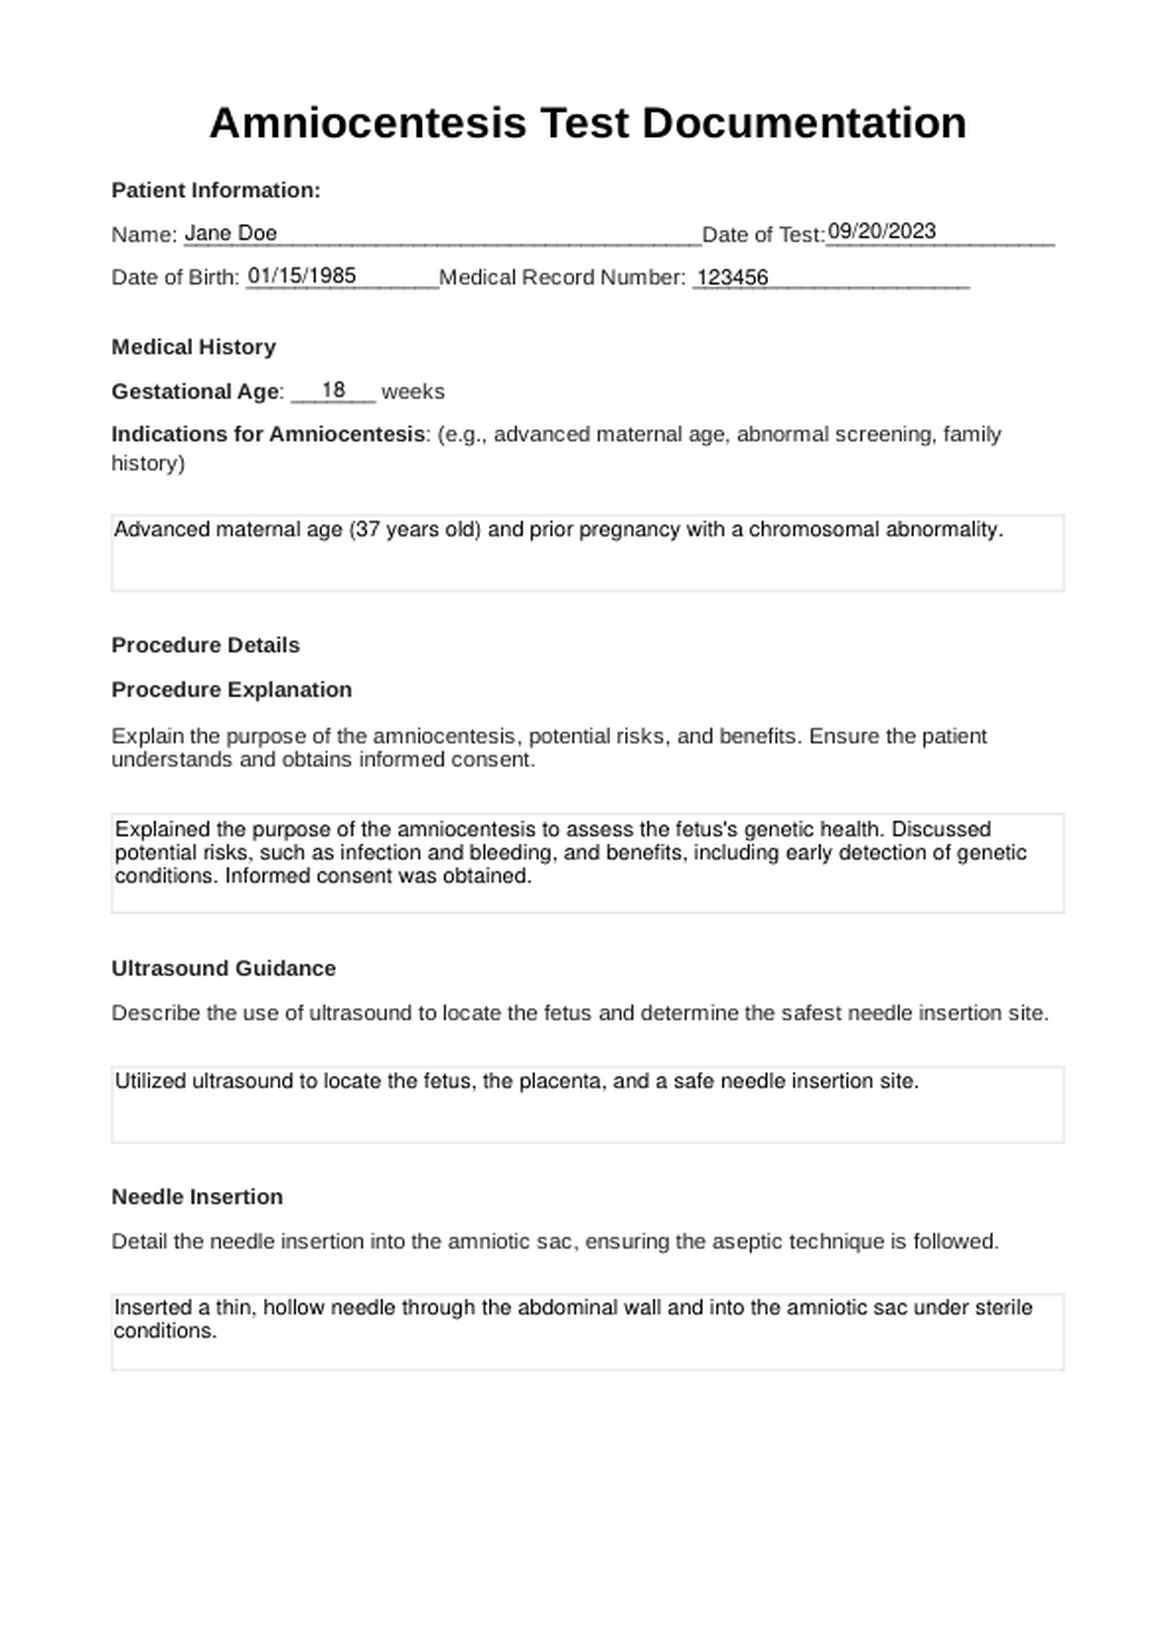 Amniocentesis PDF Example